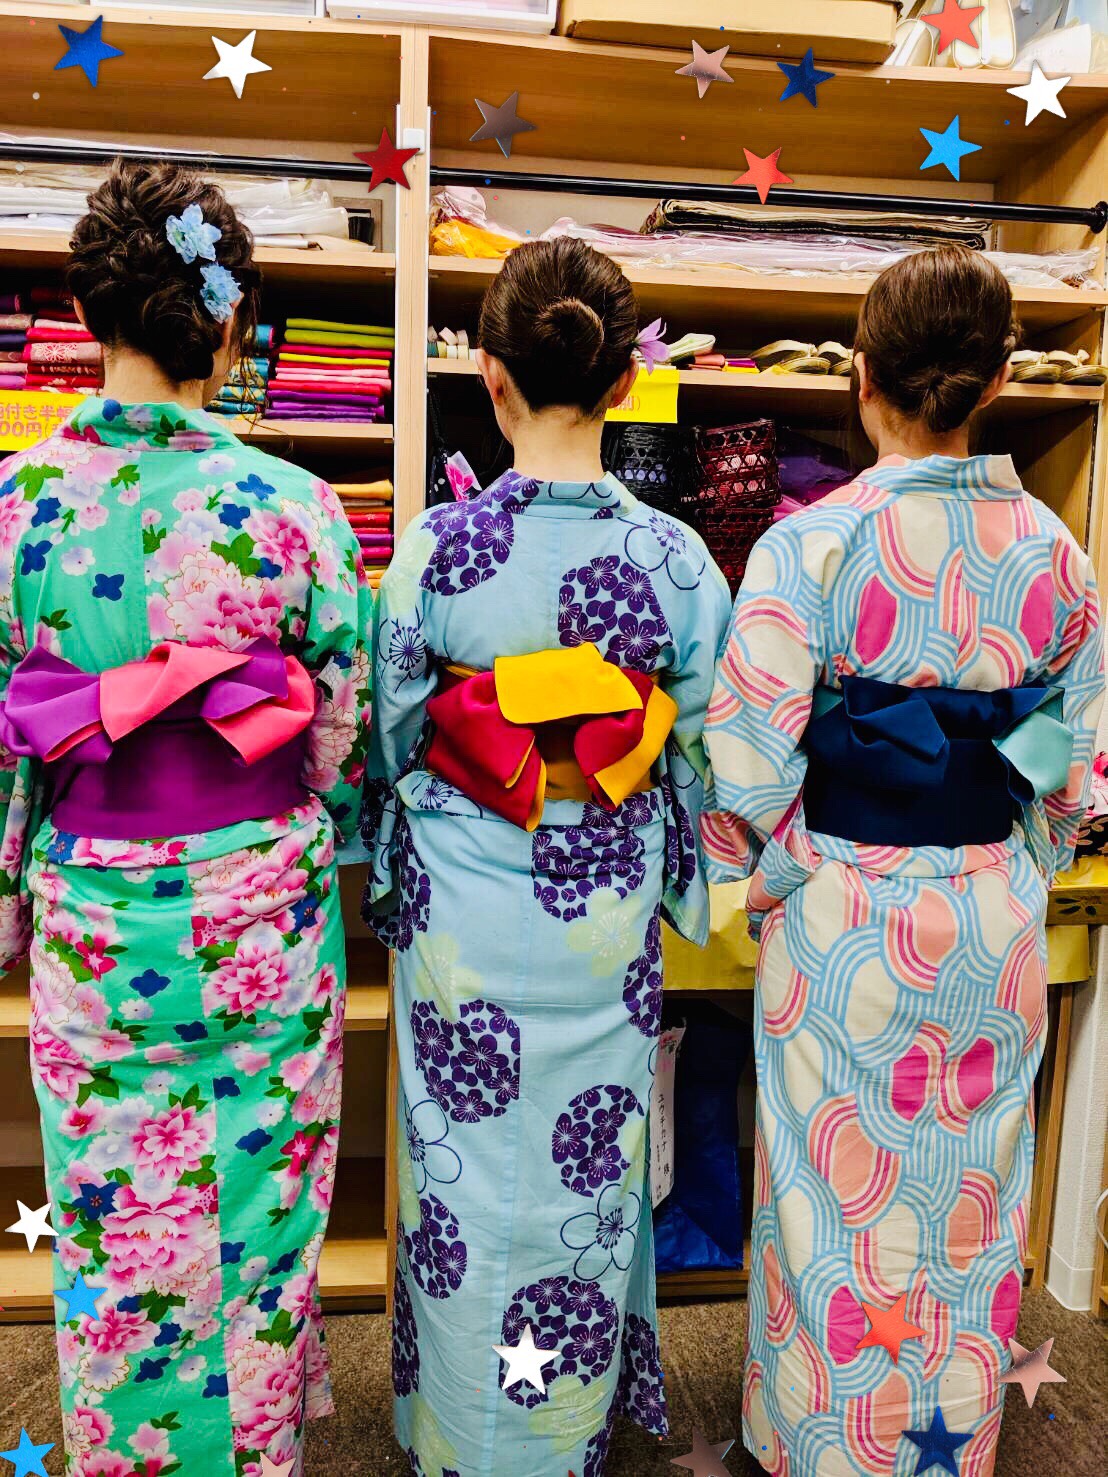 Shop Topics 東京の夏祭り 夏イベントには浴衣 着物レンタルvasara渋谷店 渋谷で着物 浴衣を楽しむなら 着物レンタルvasara